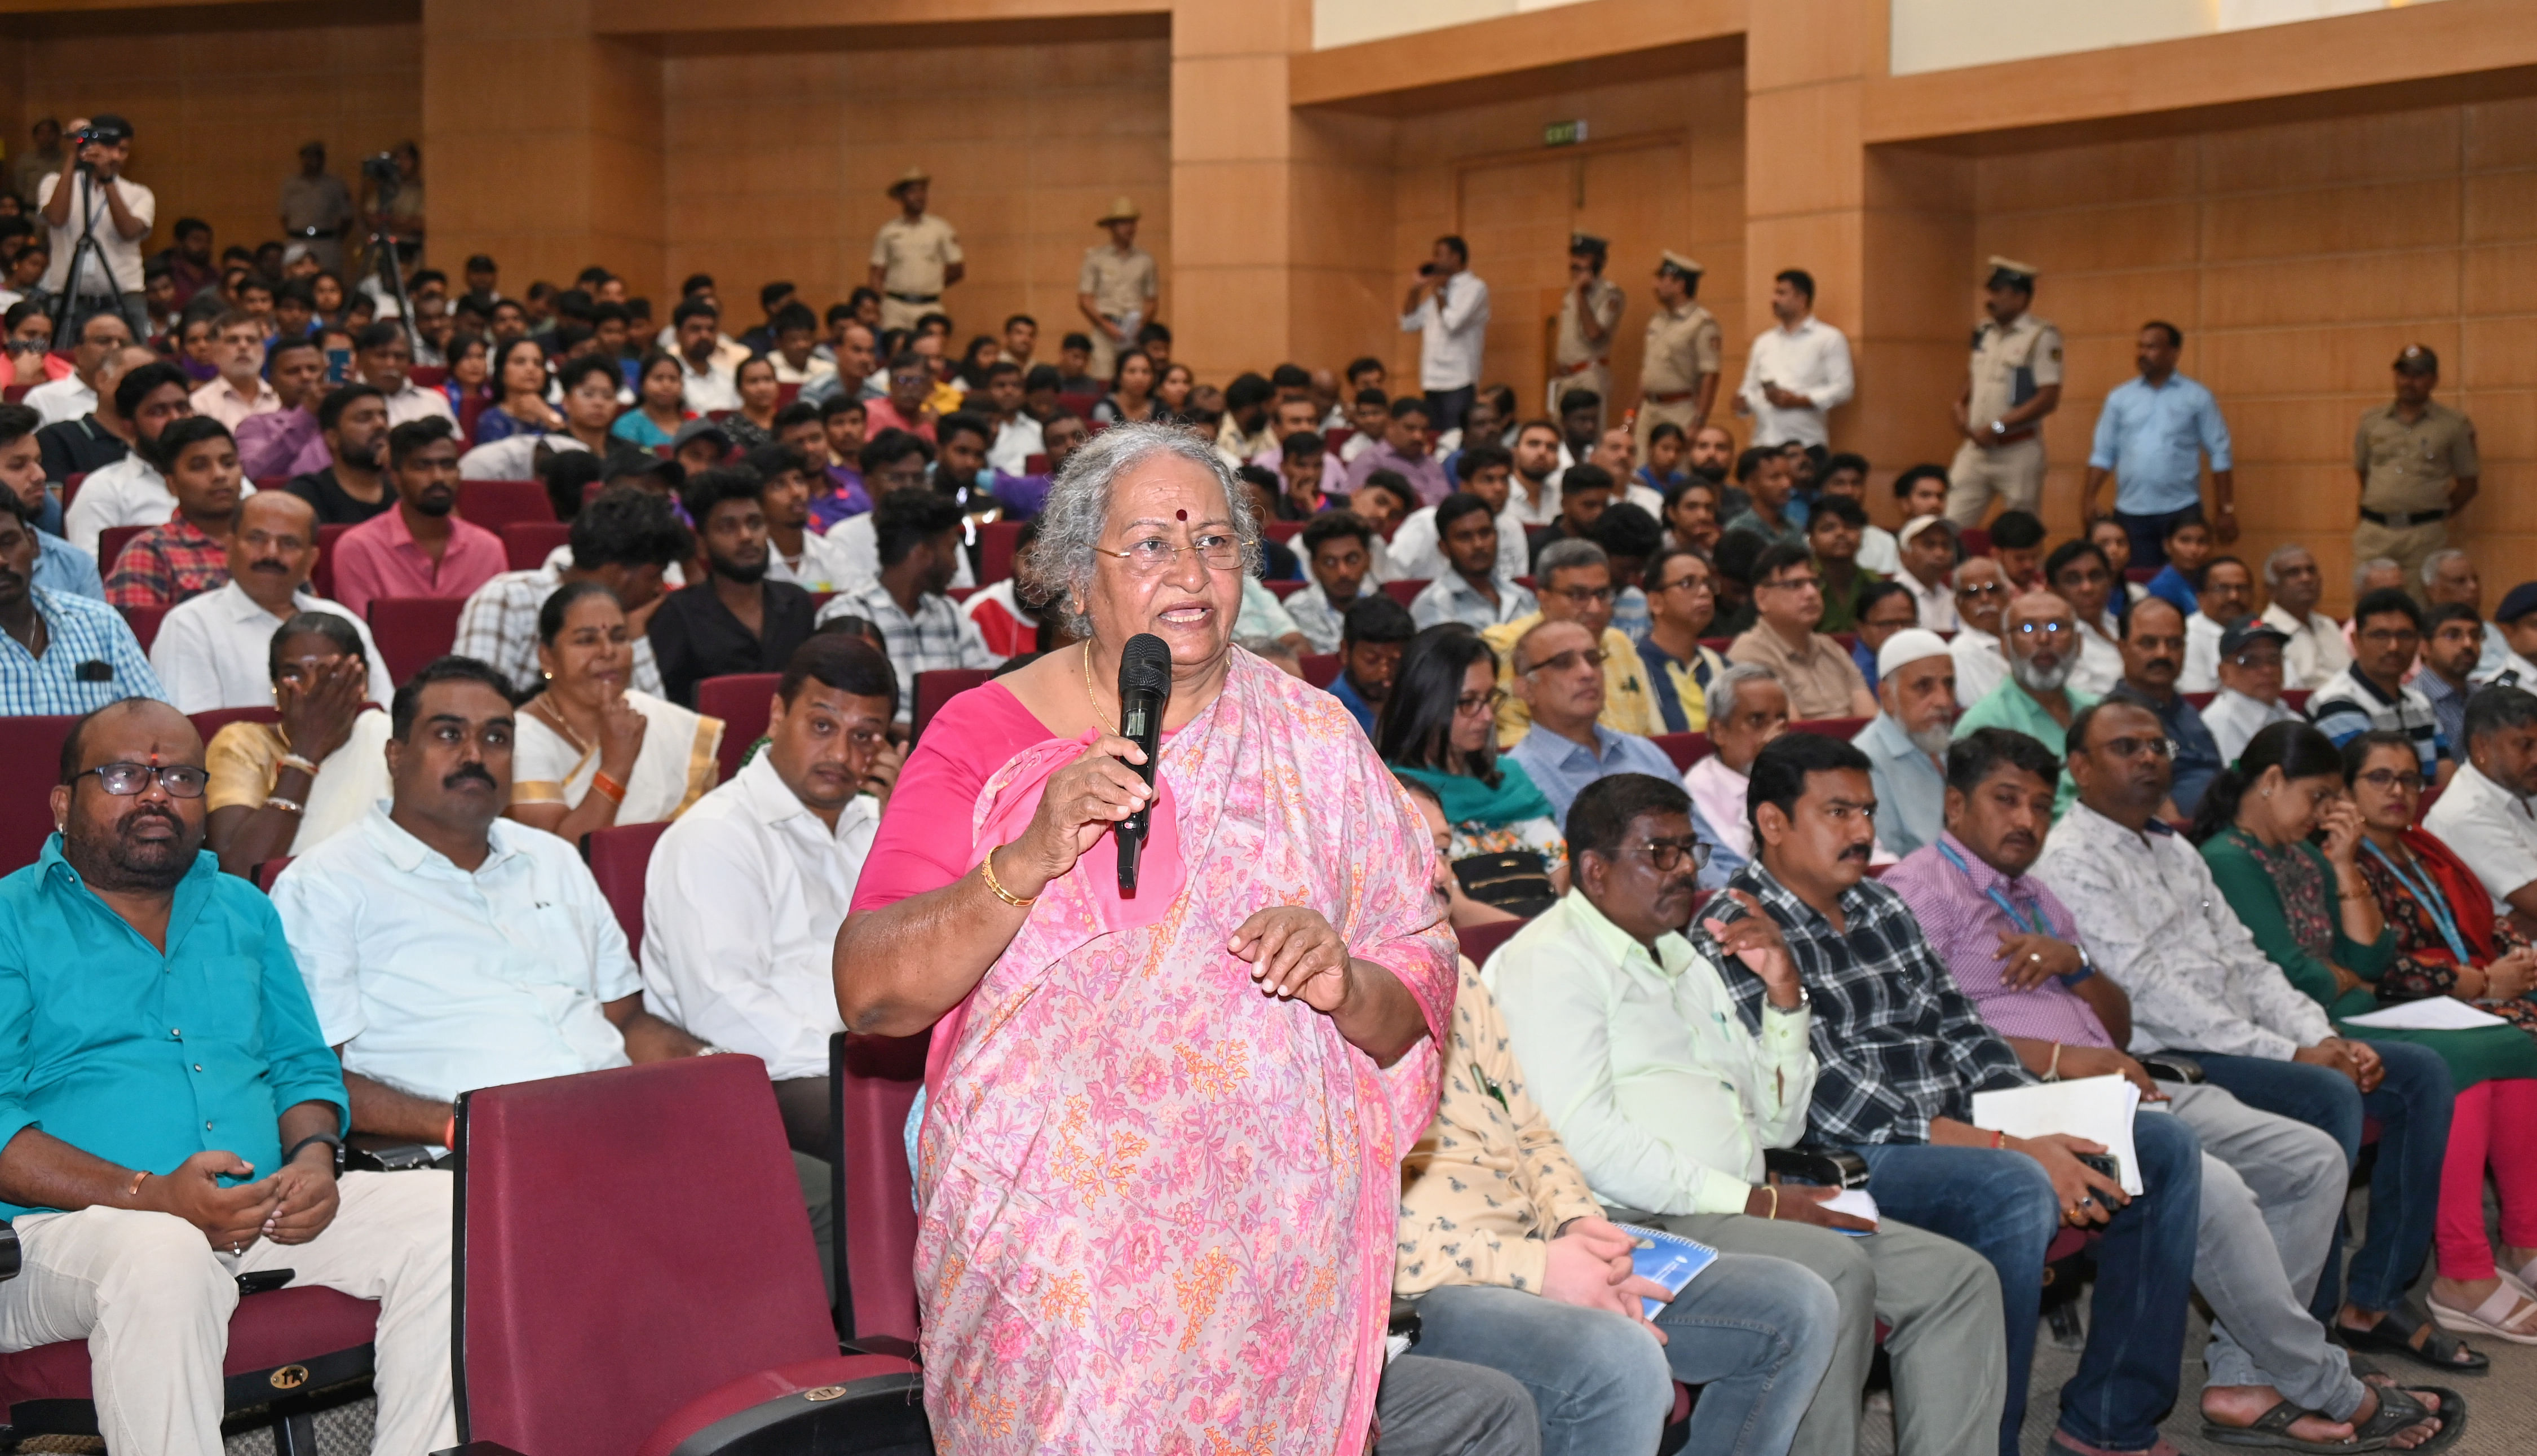 <div class="paragraphs"><p>Citizens participate in Masika Janasamparka Divasa in Bengaluru on Saturday. </p></div>